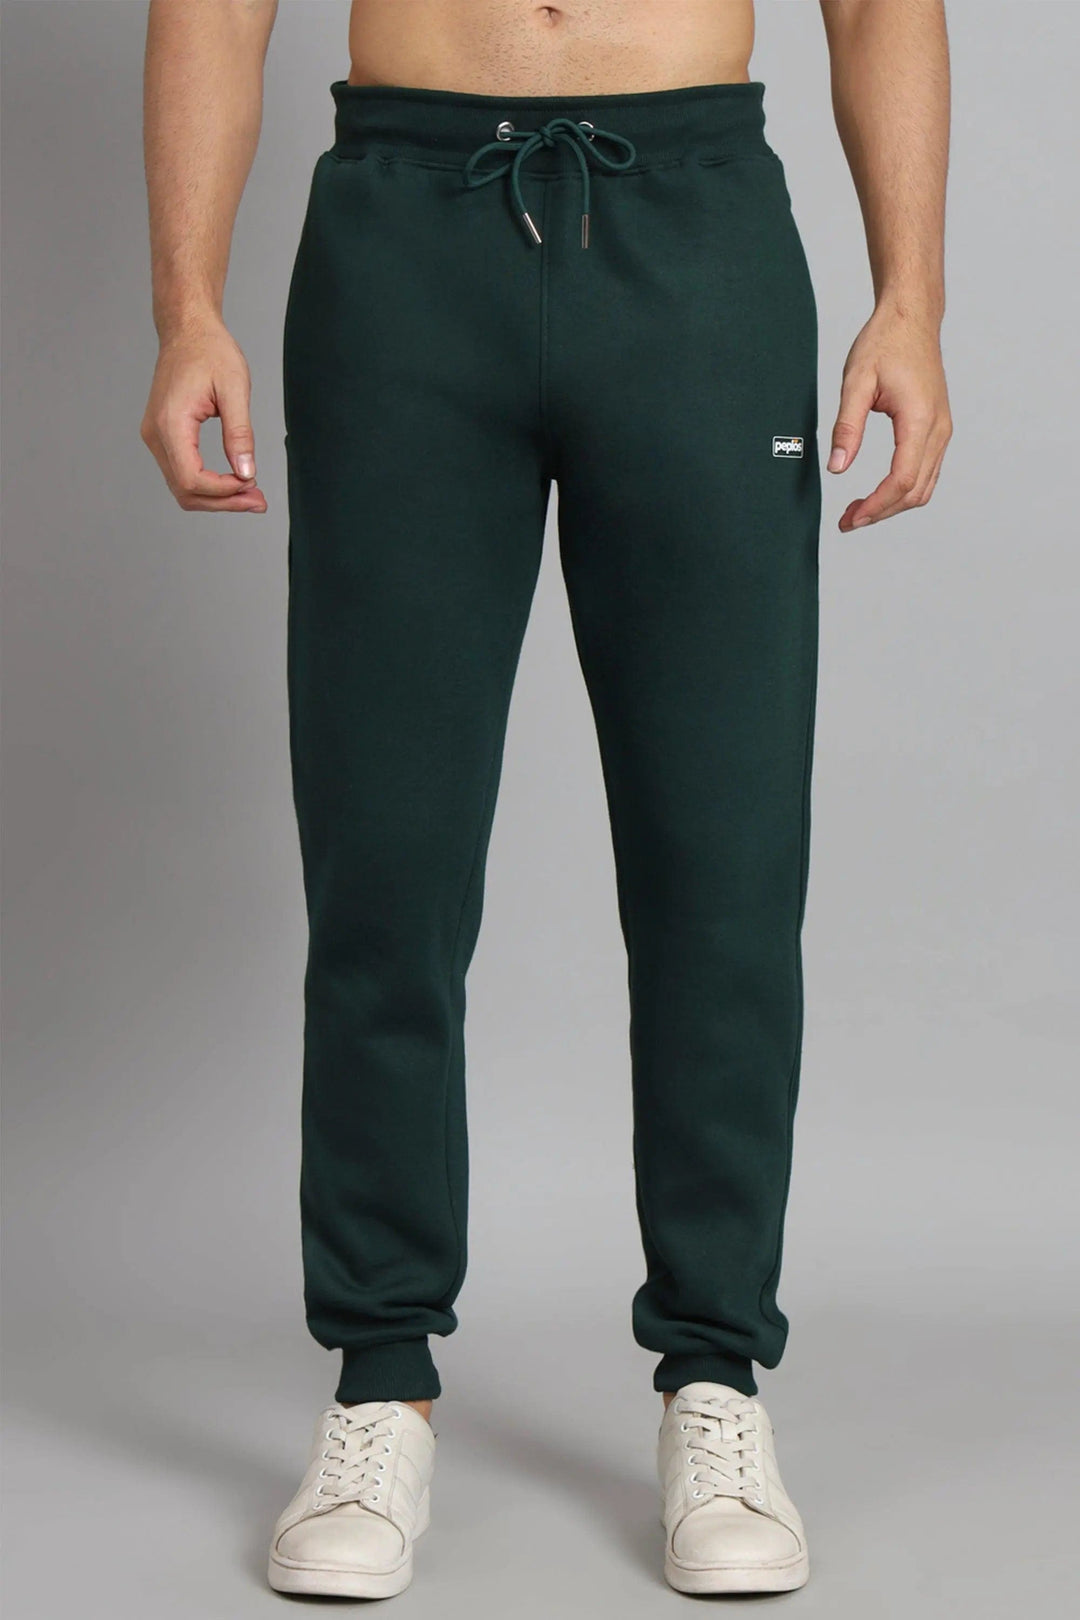 Regular Fit Printed Bottle Green Hoodie-Trouser Co-ord Set For Men